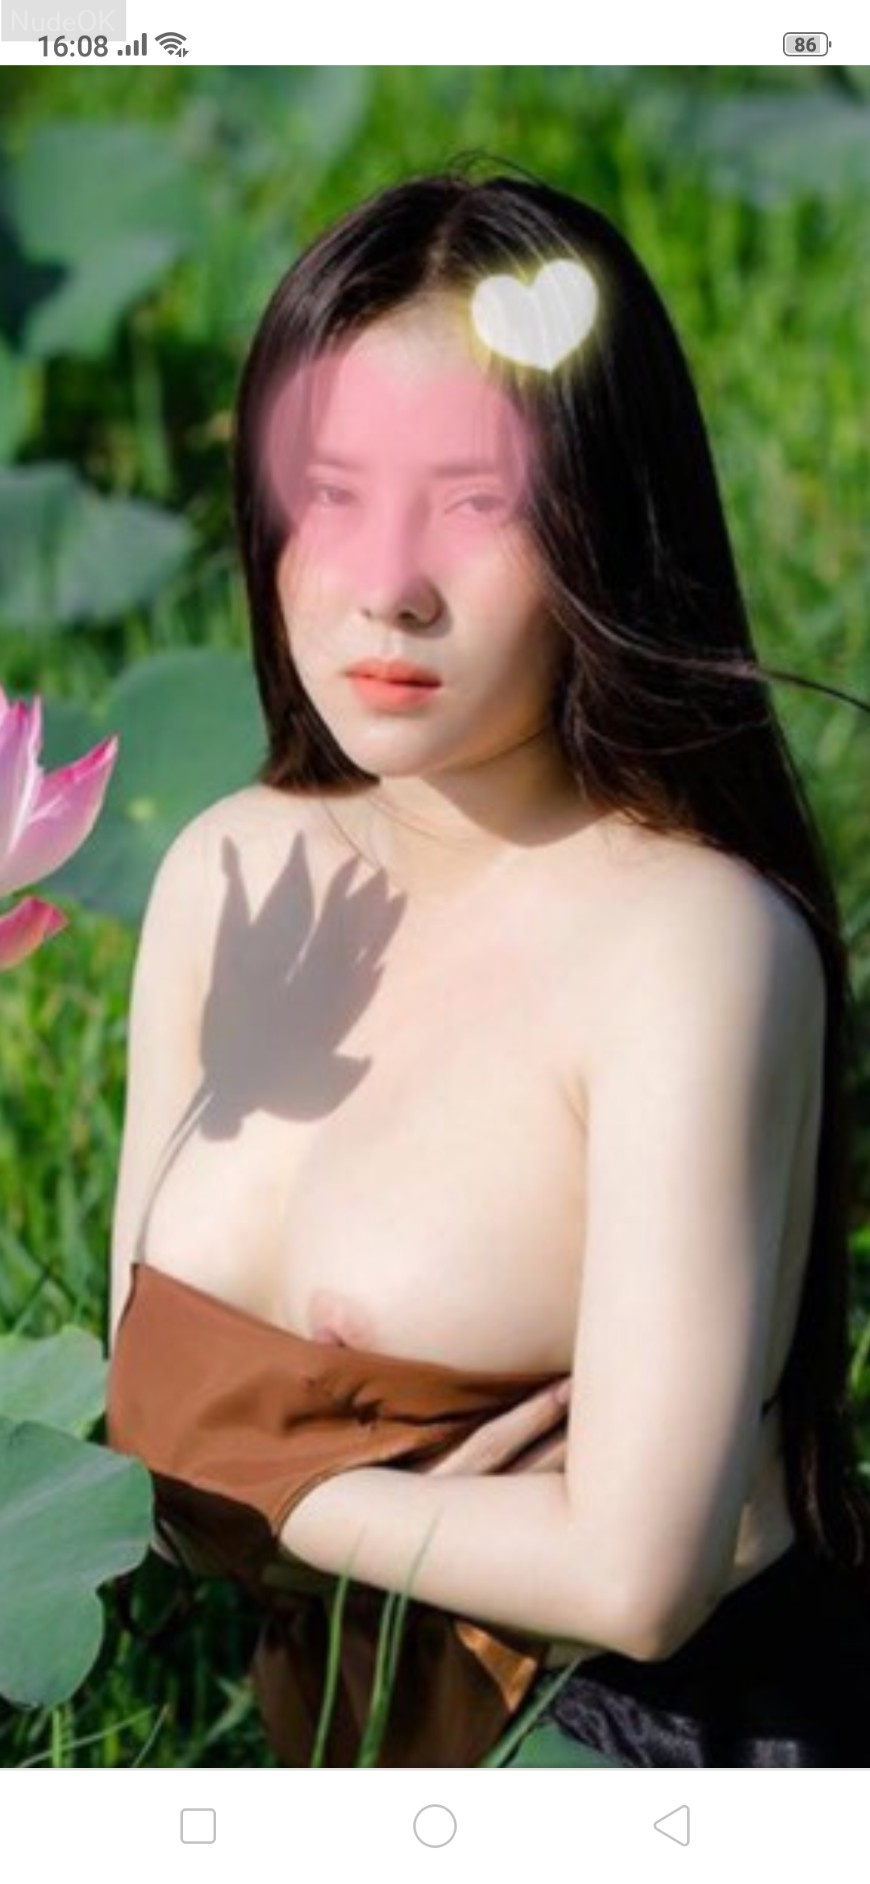 NudeOK.Com nude girl sexy asian photos naked body erotic; 